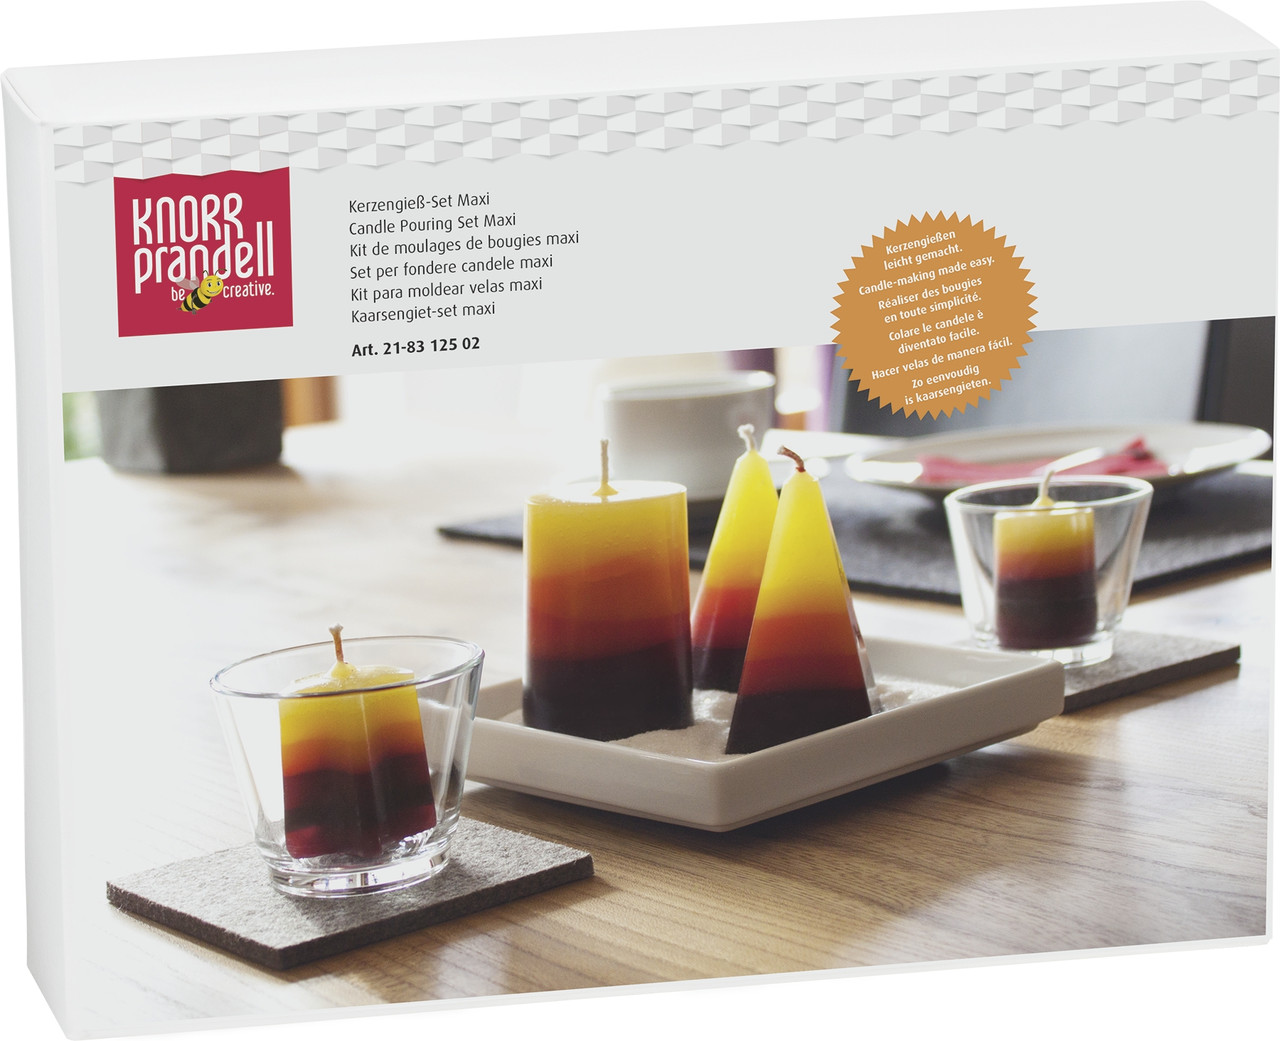 Набор для заливки свечей Knorr Prandell 218312502 maxi